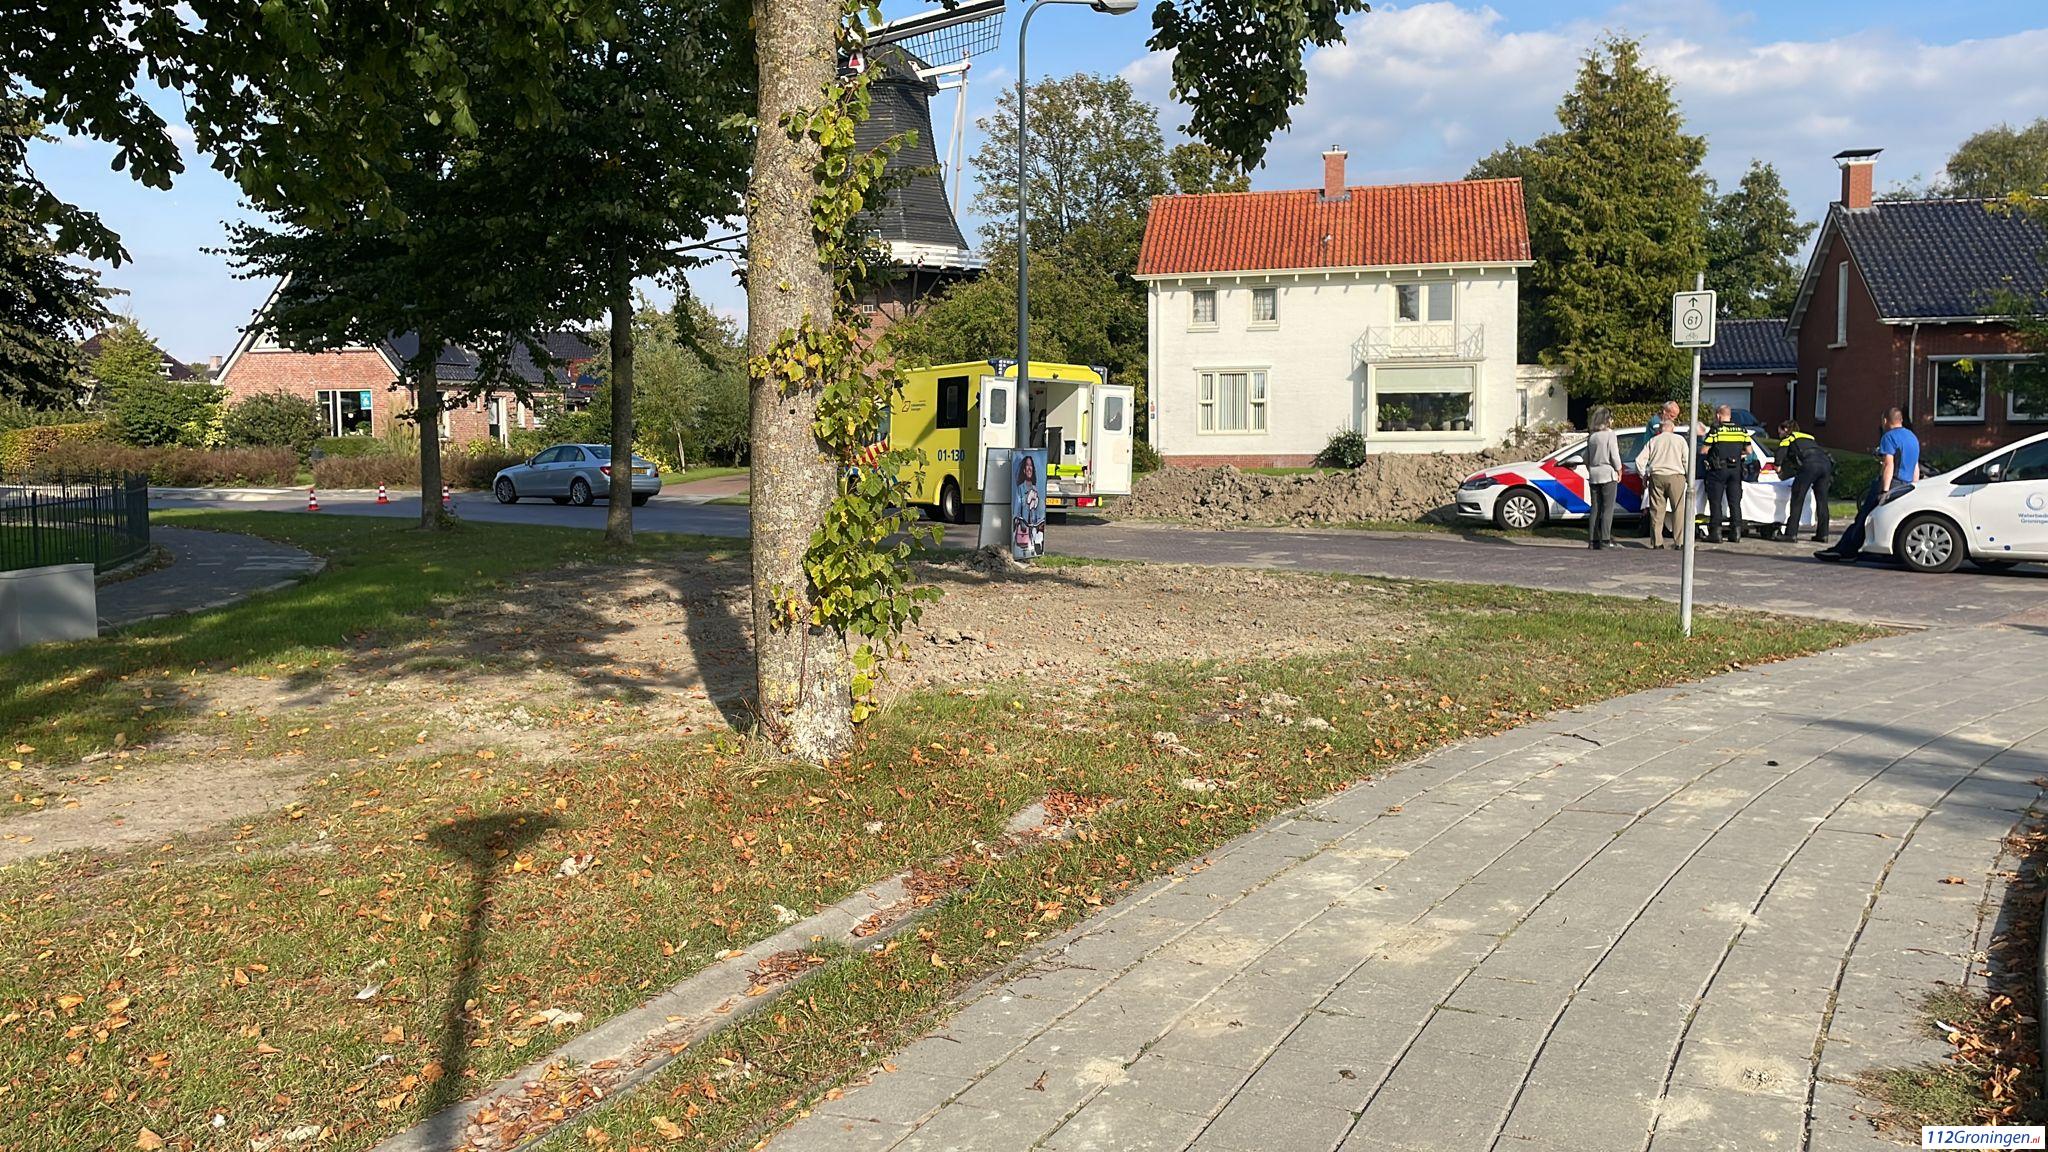 Ongeval Molenweg Loppersum, 1 gewonde.